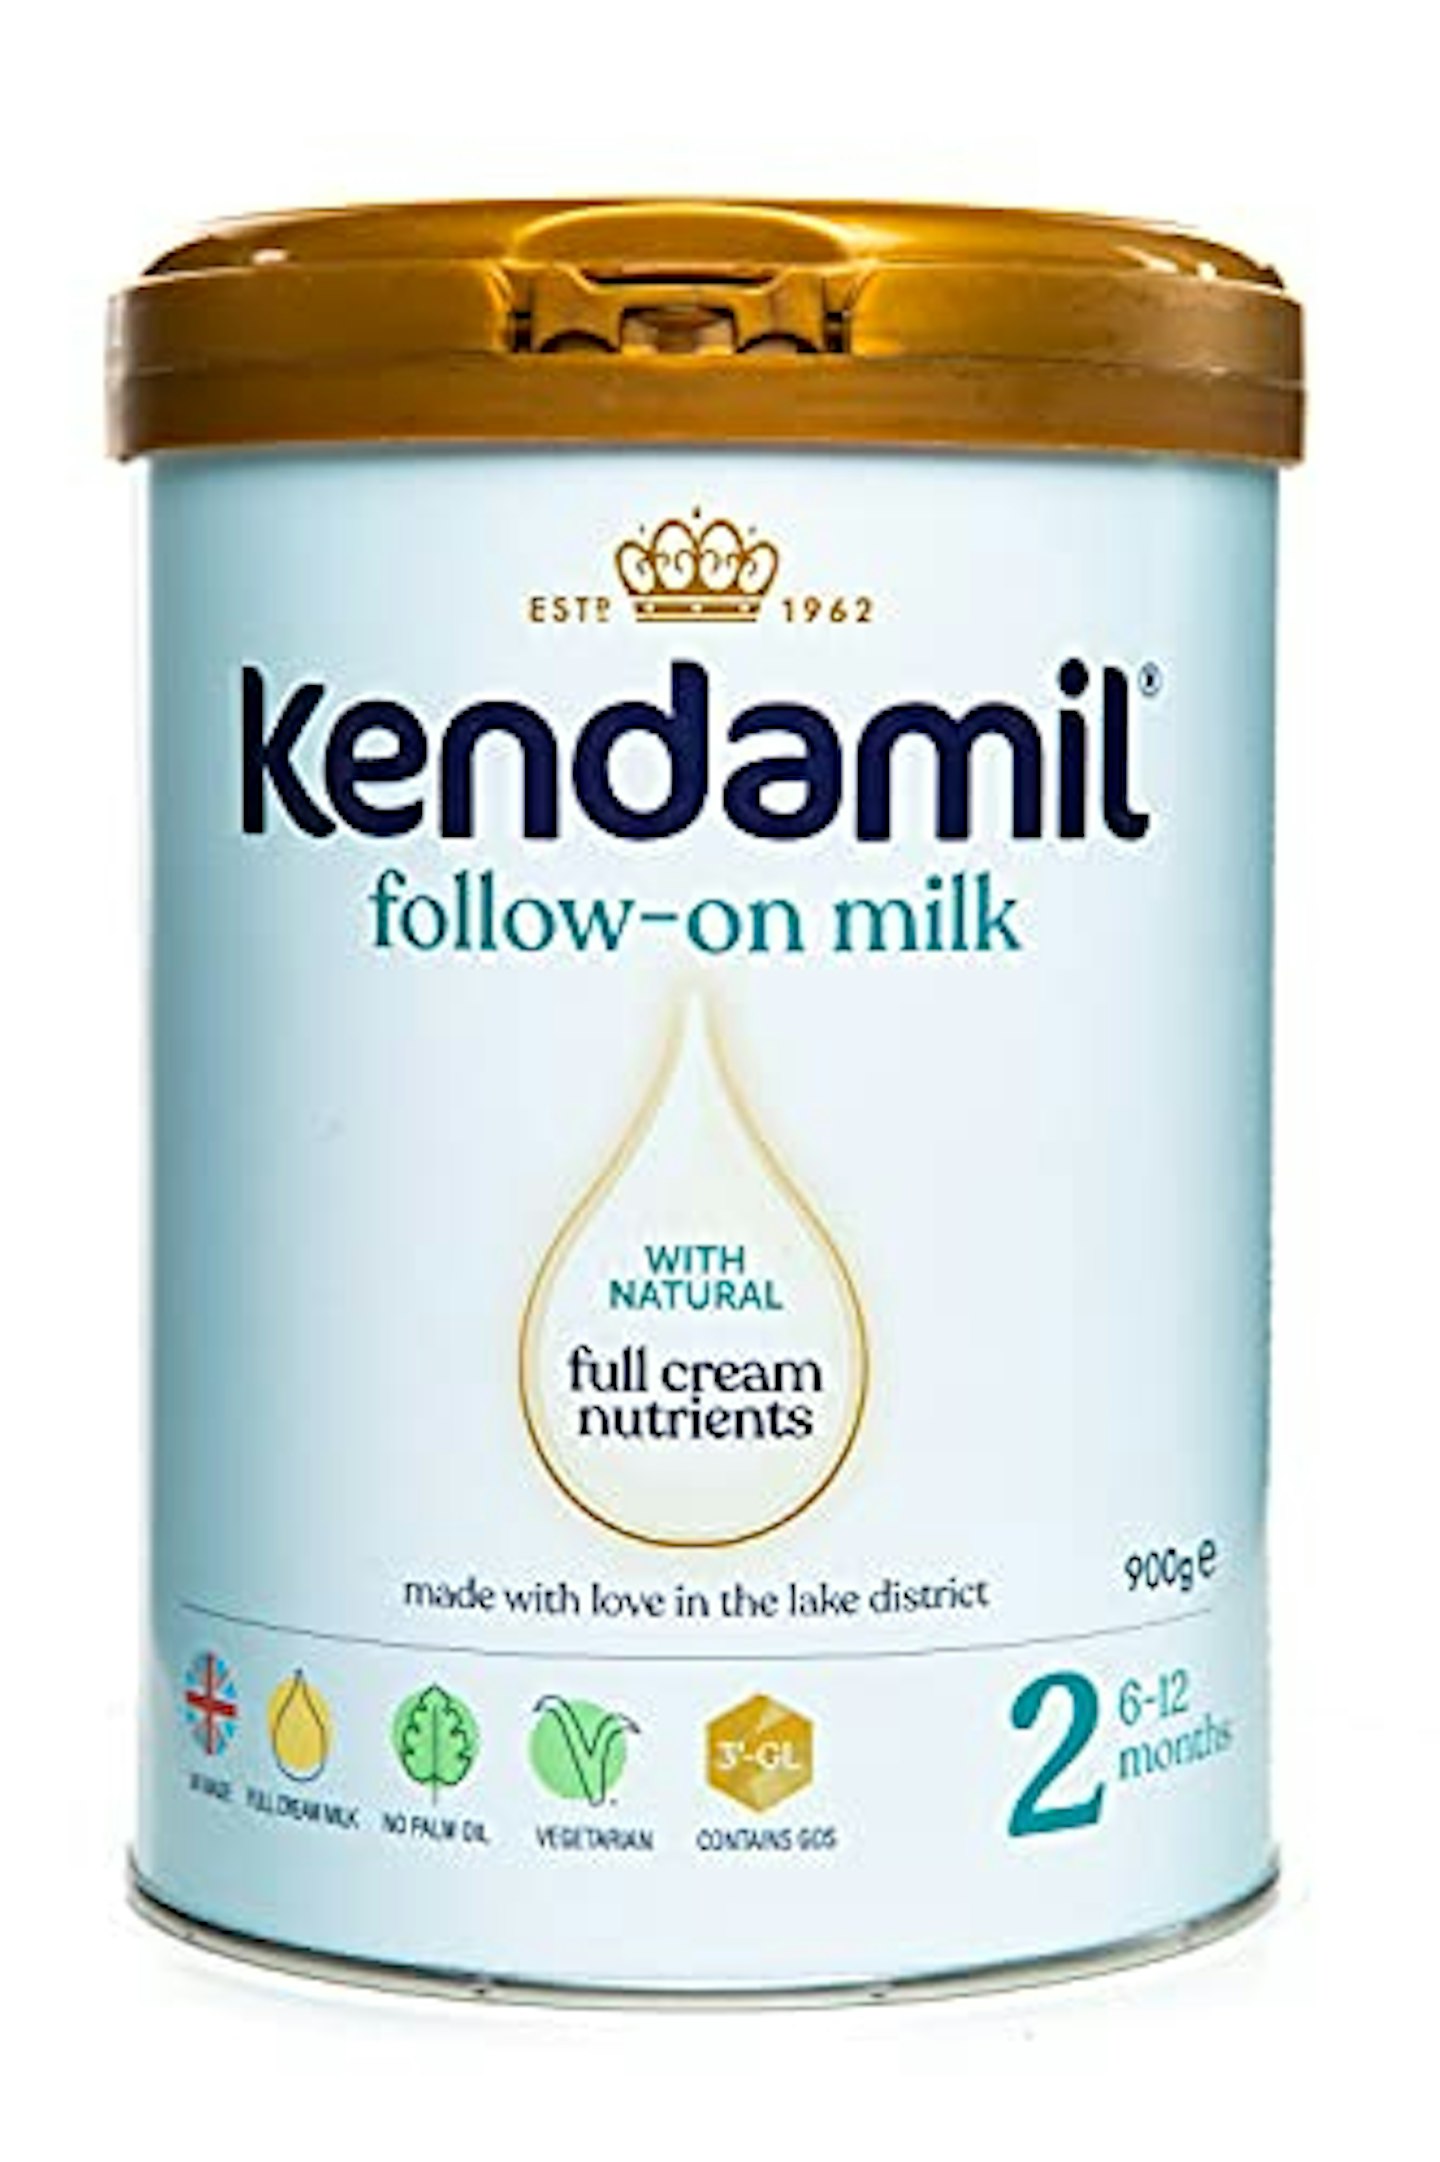 Kendamil Follow-On Milk Review